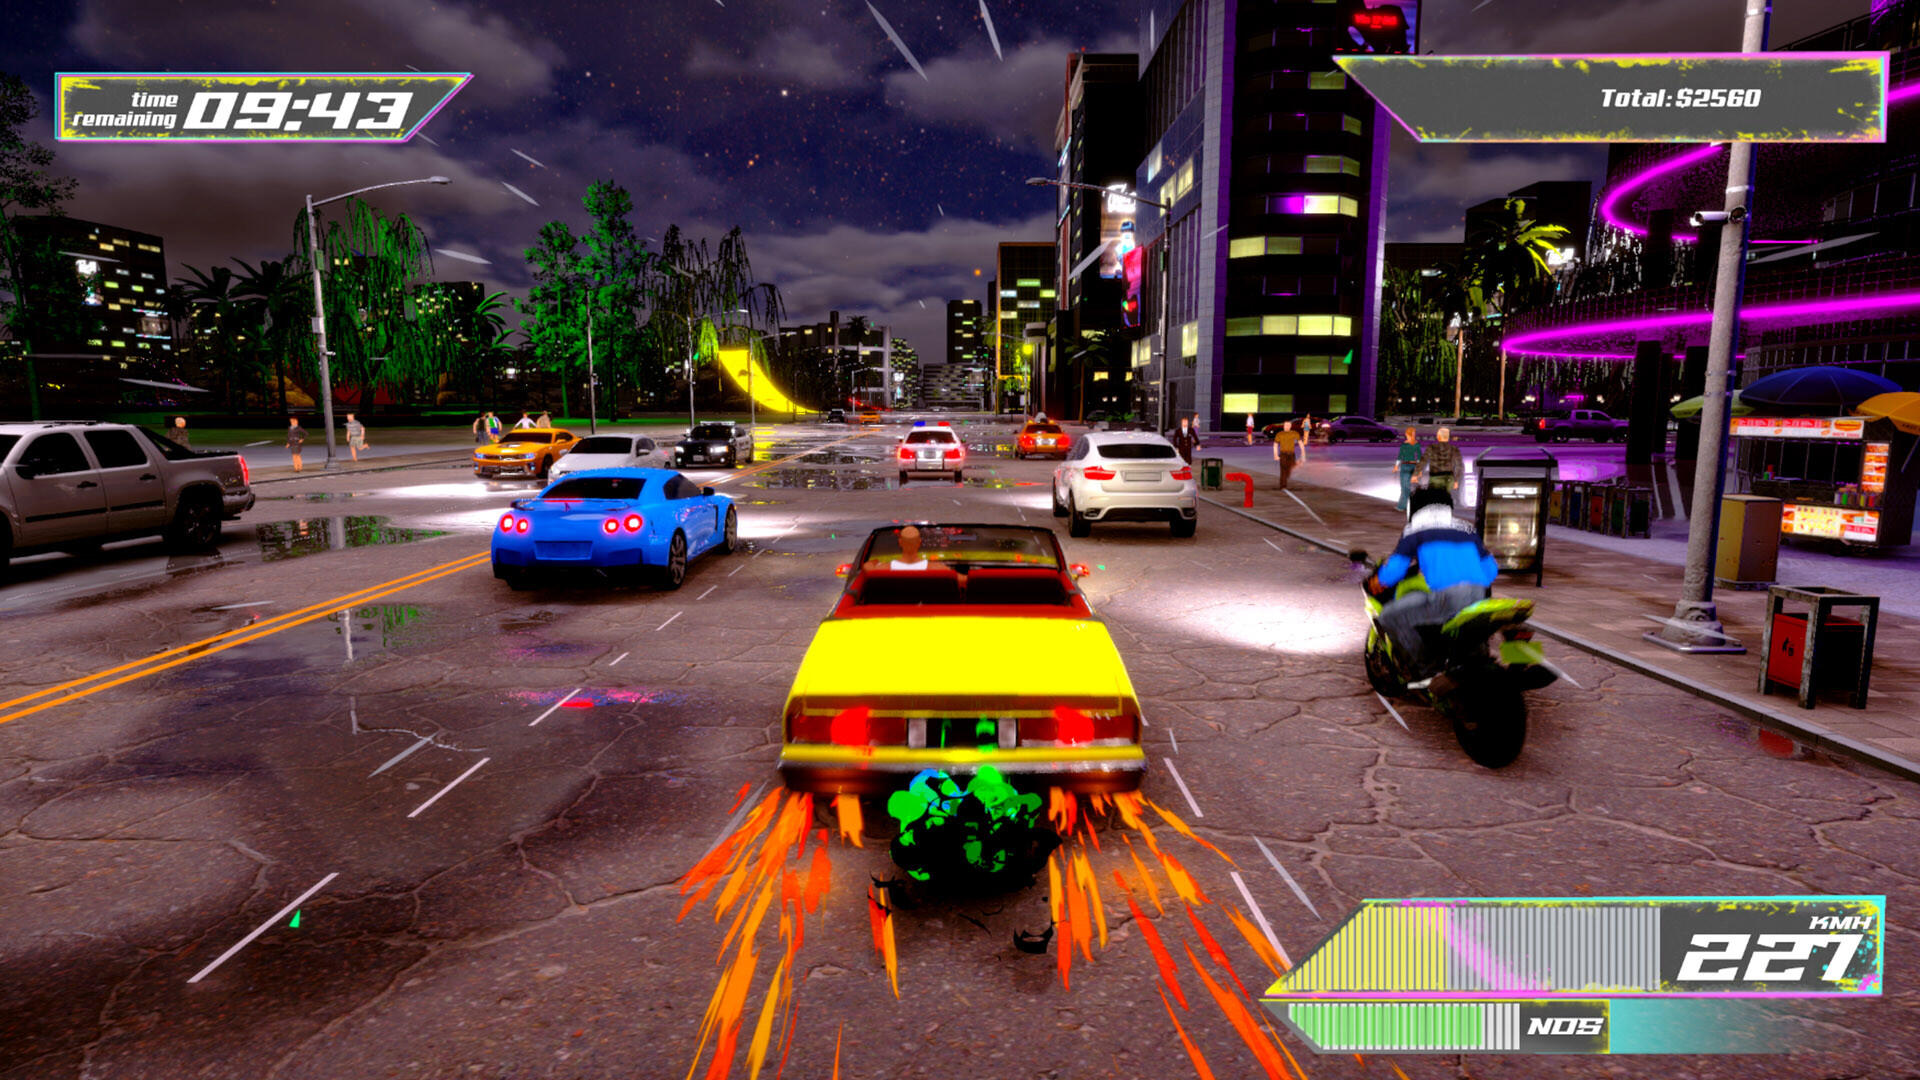 Screenshot 1 of Urban Taxi Simulator 